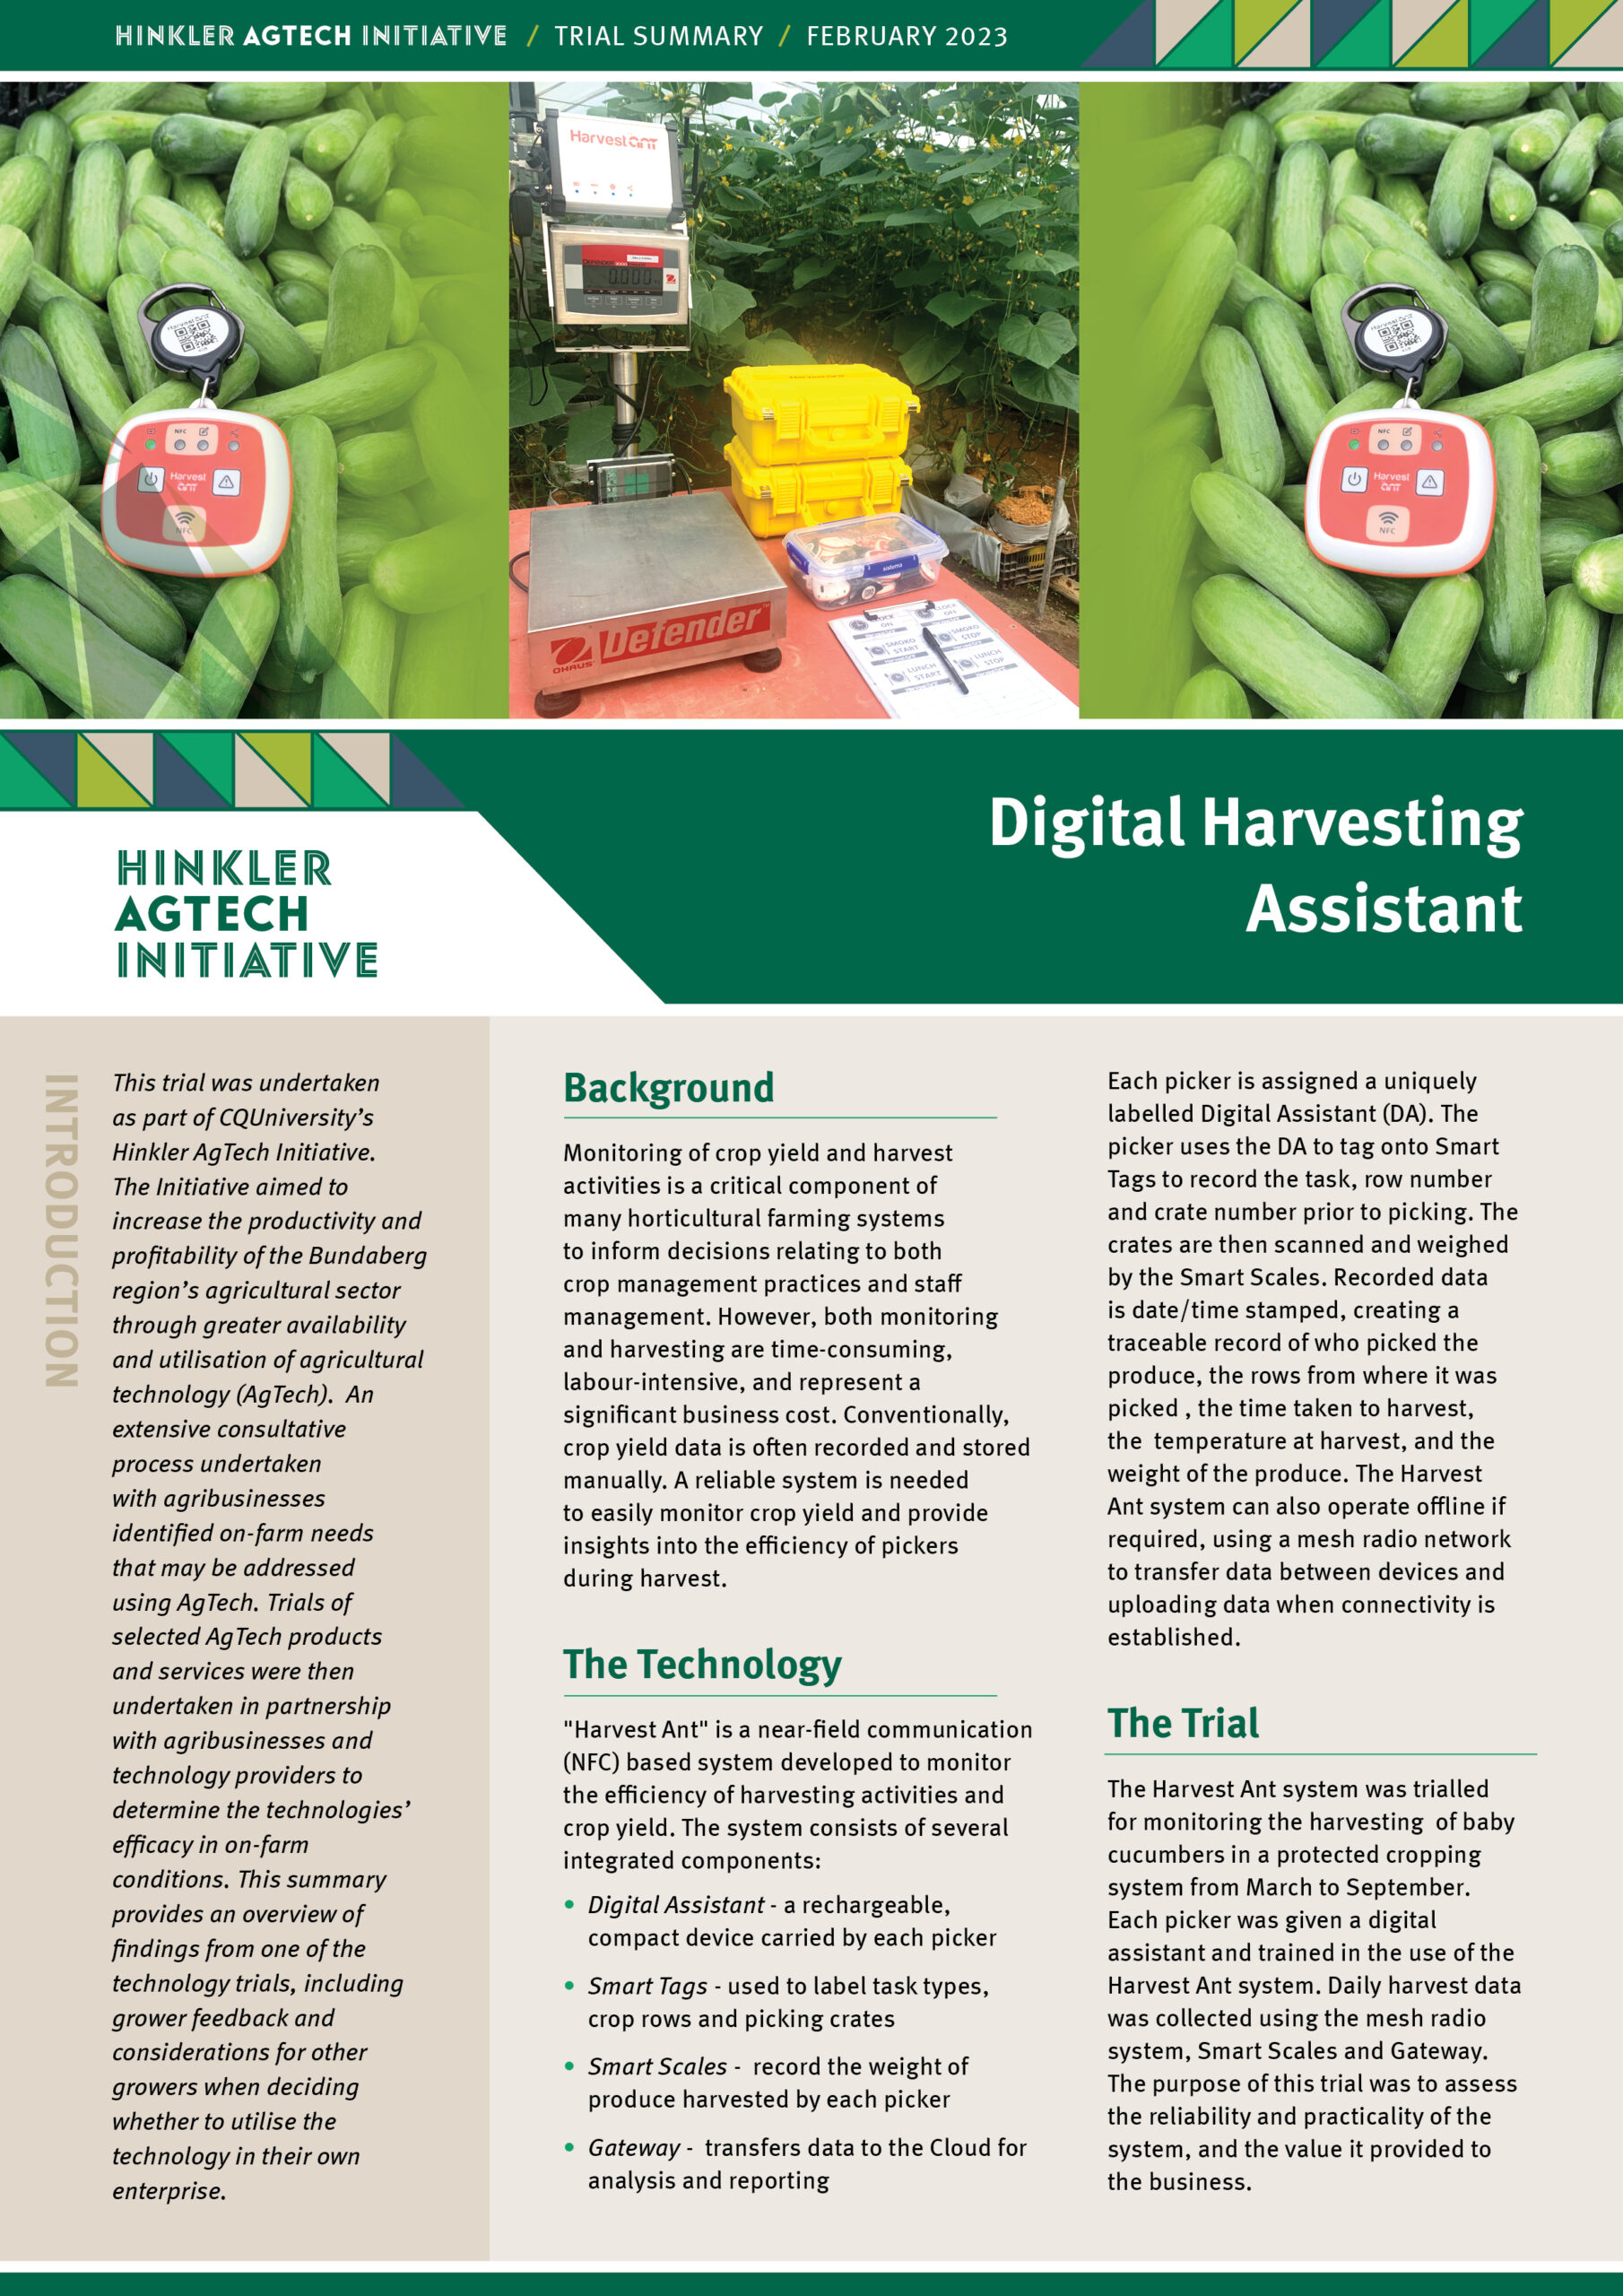 Digital Harvesting Assistant